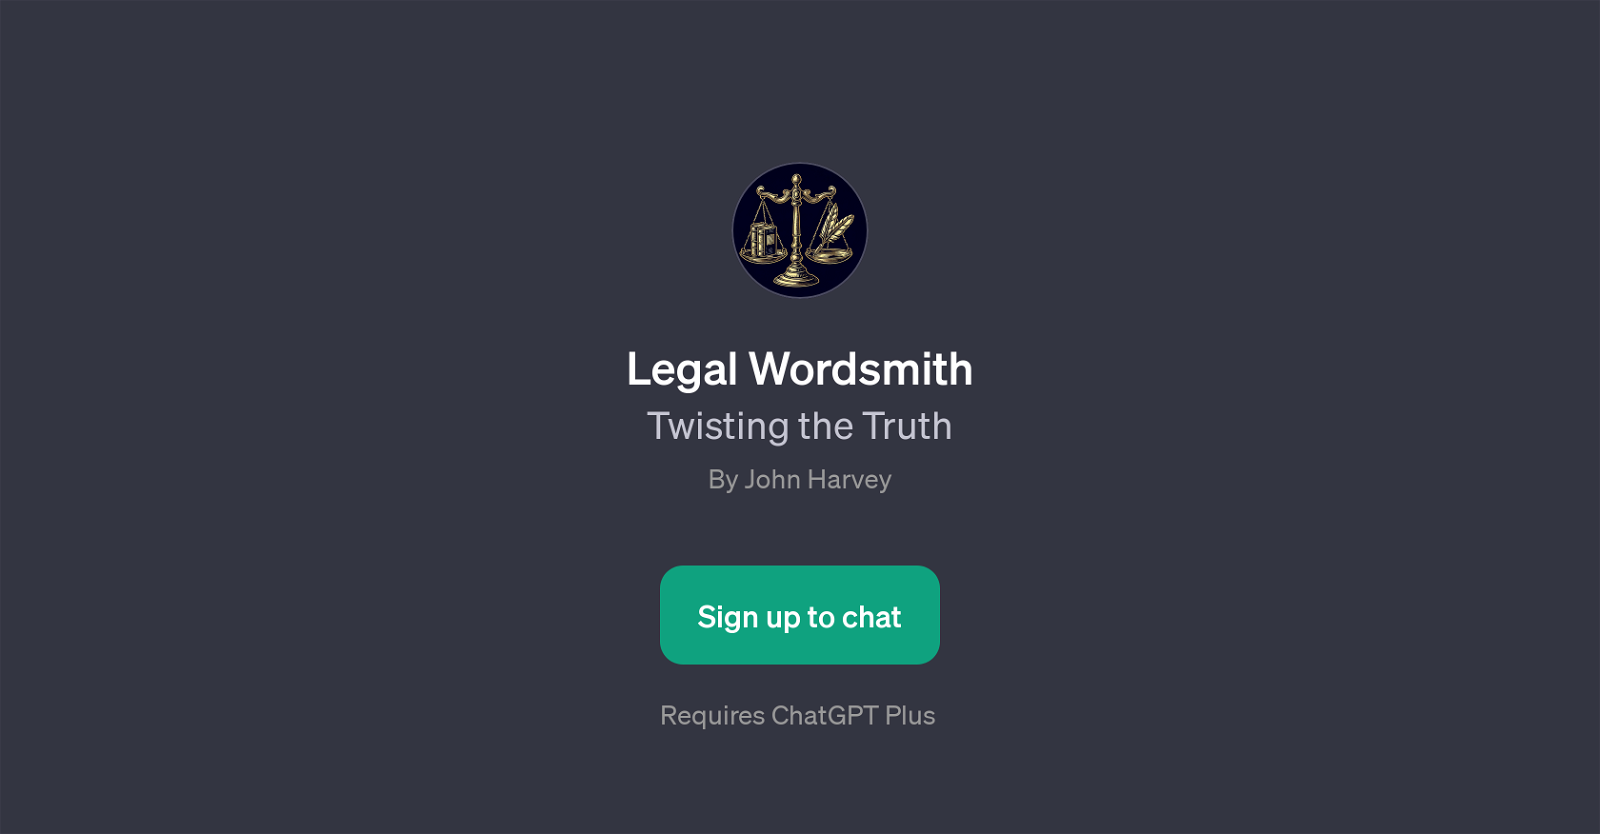 Legal Wordsmith website